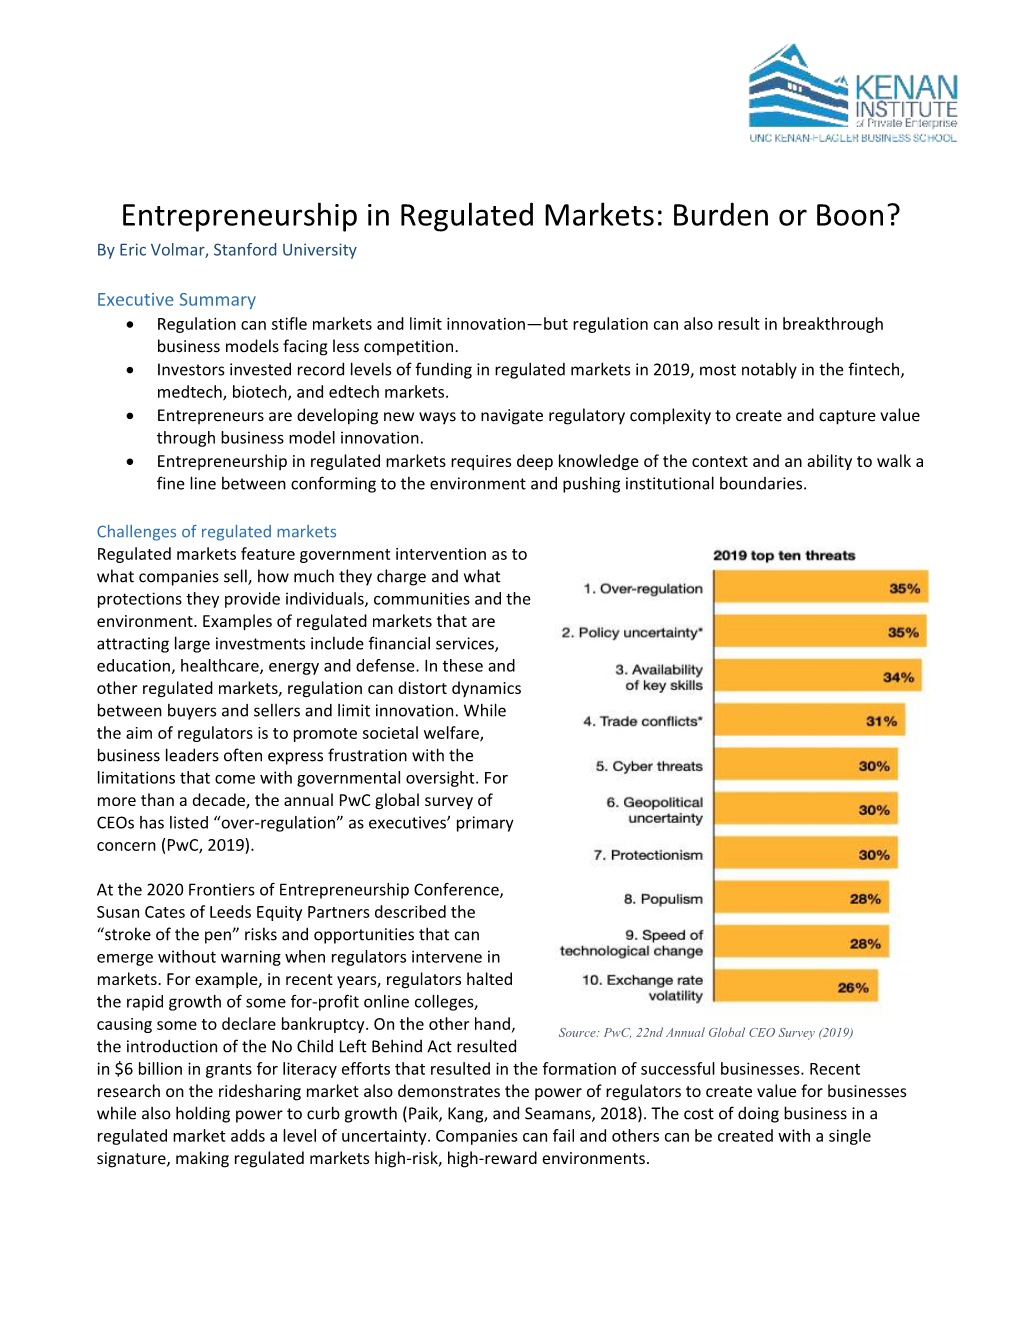 Entrepreneurship in Regulated Markets: Burden Or Boon? by Eric Volmar, Stanford University